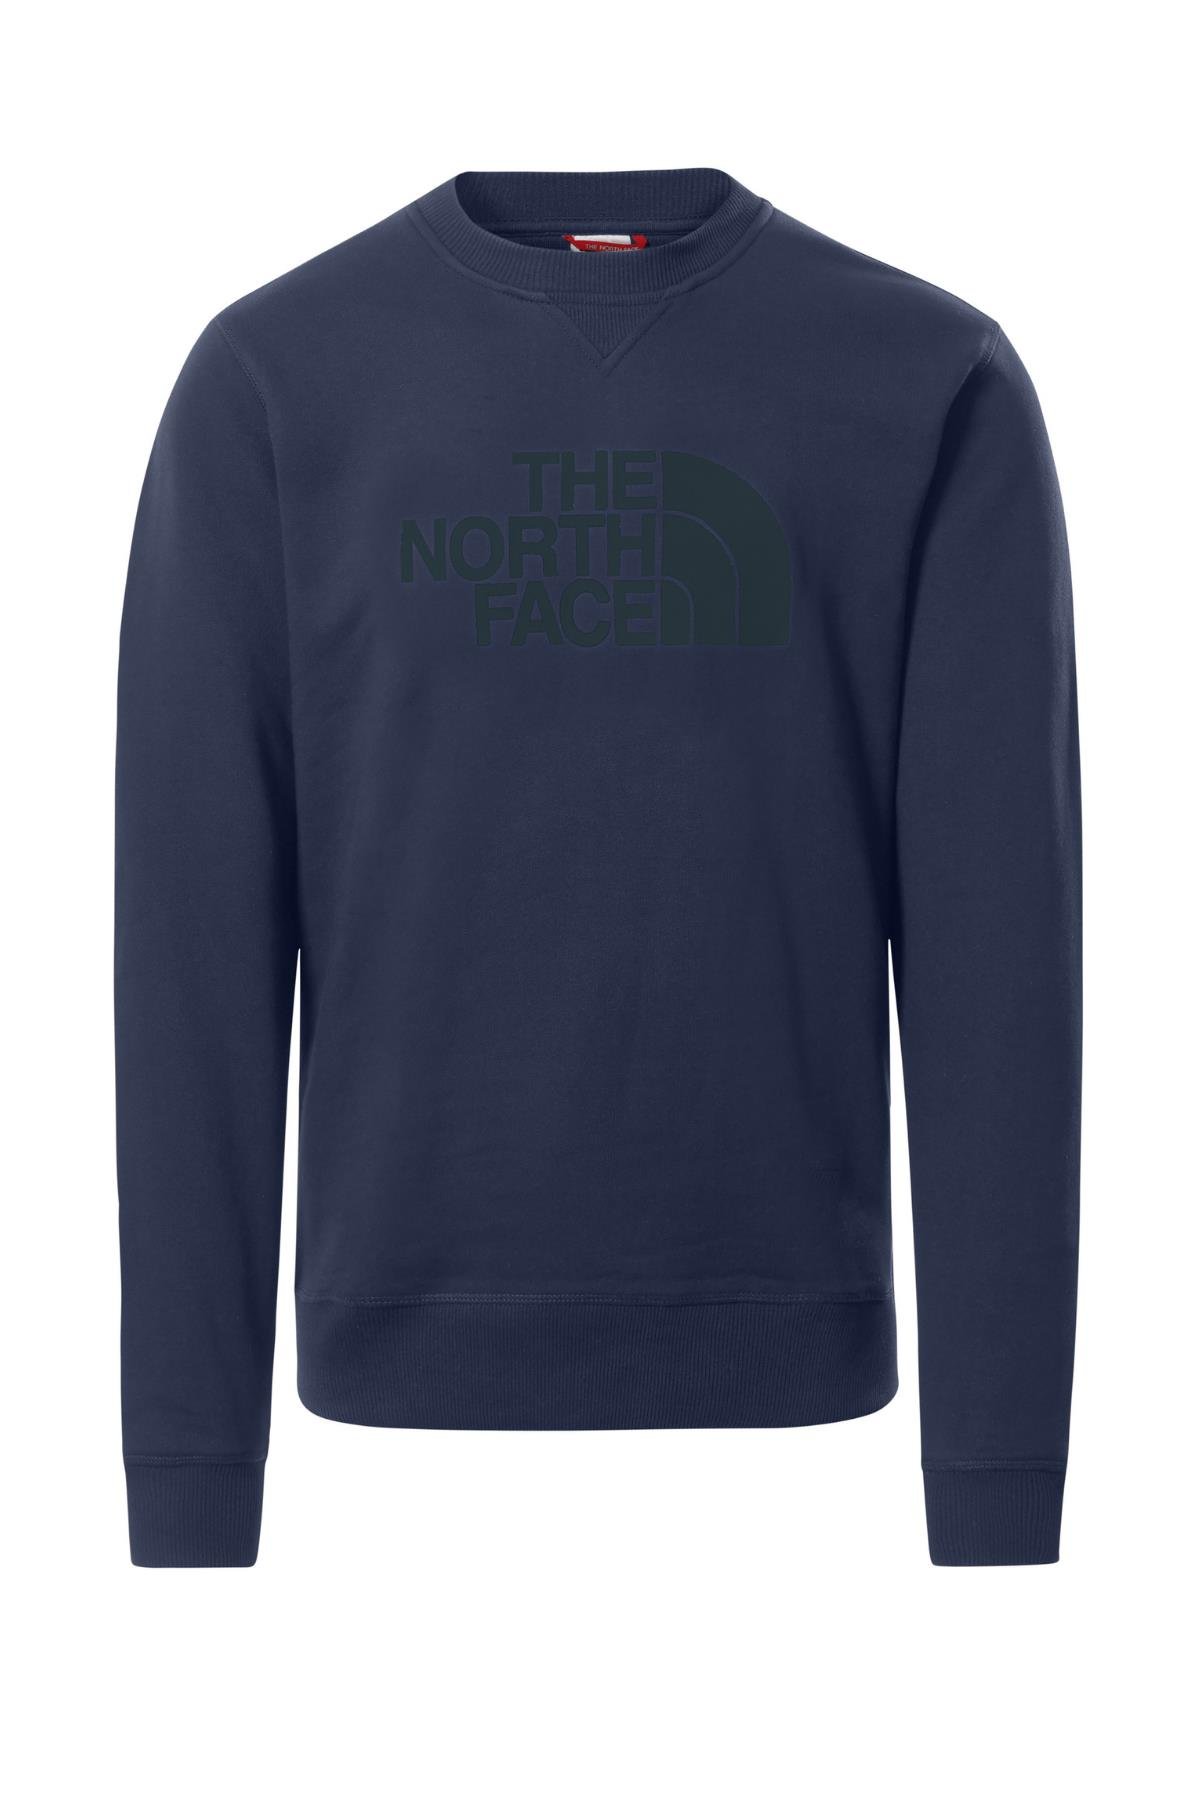 The North Face Drew Peak Crew Erkek Sweatshirt Lacivert